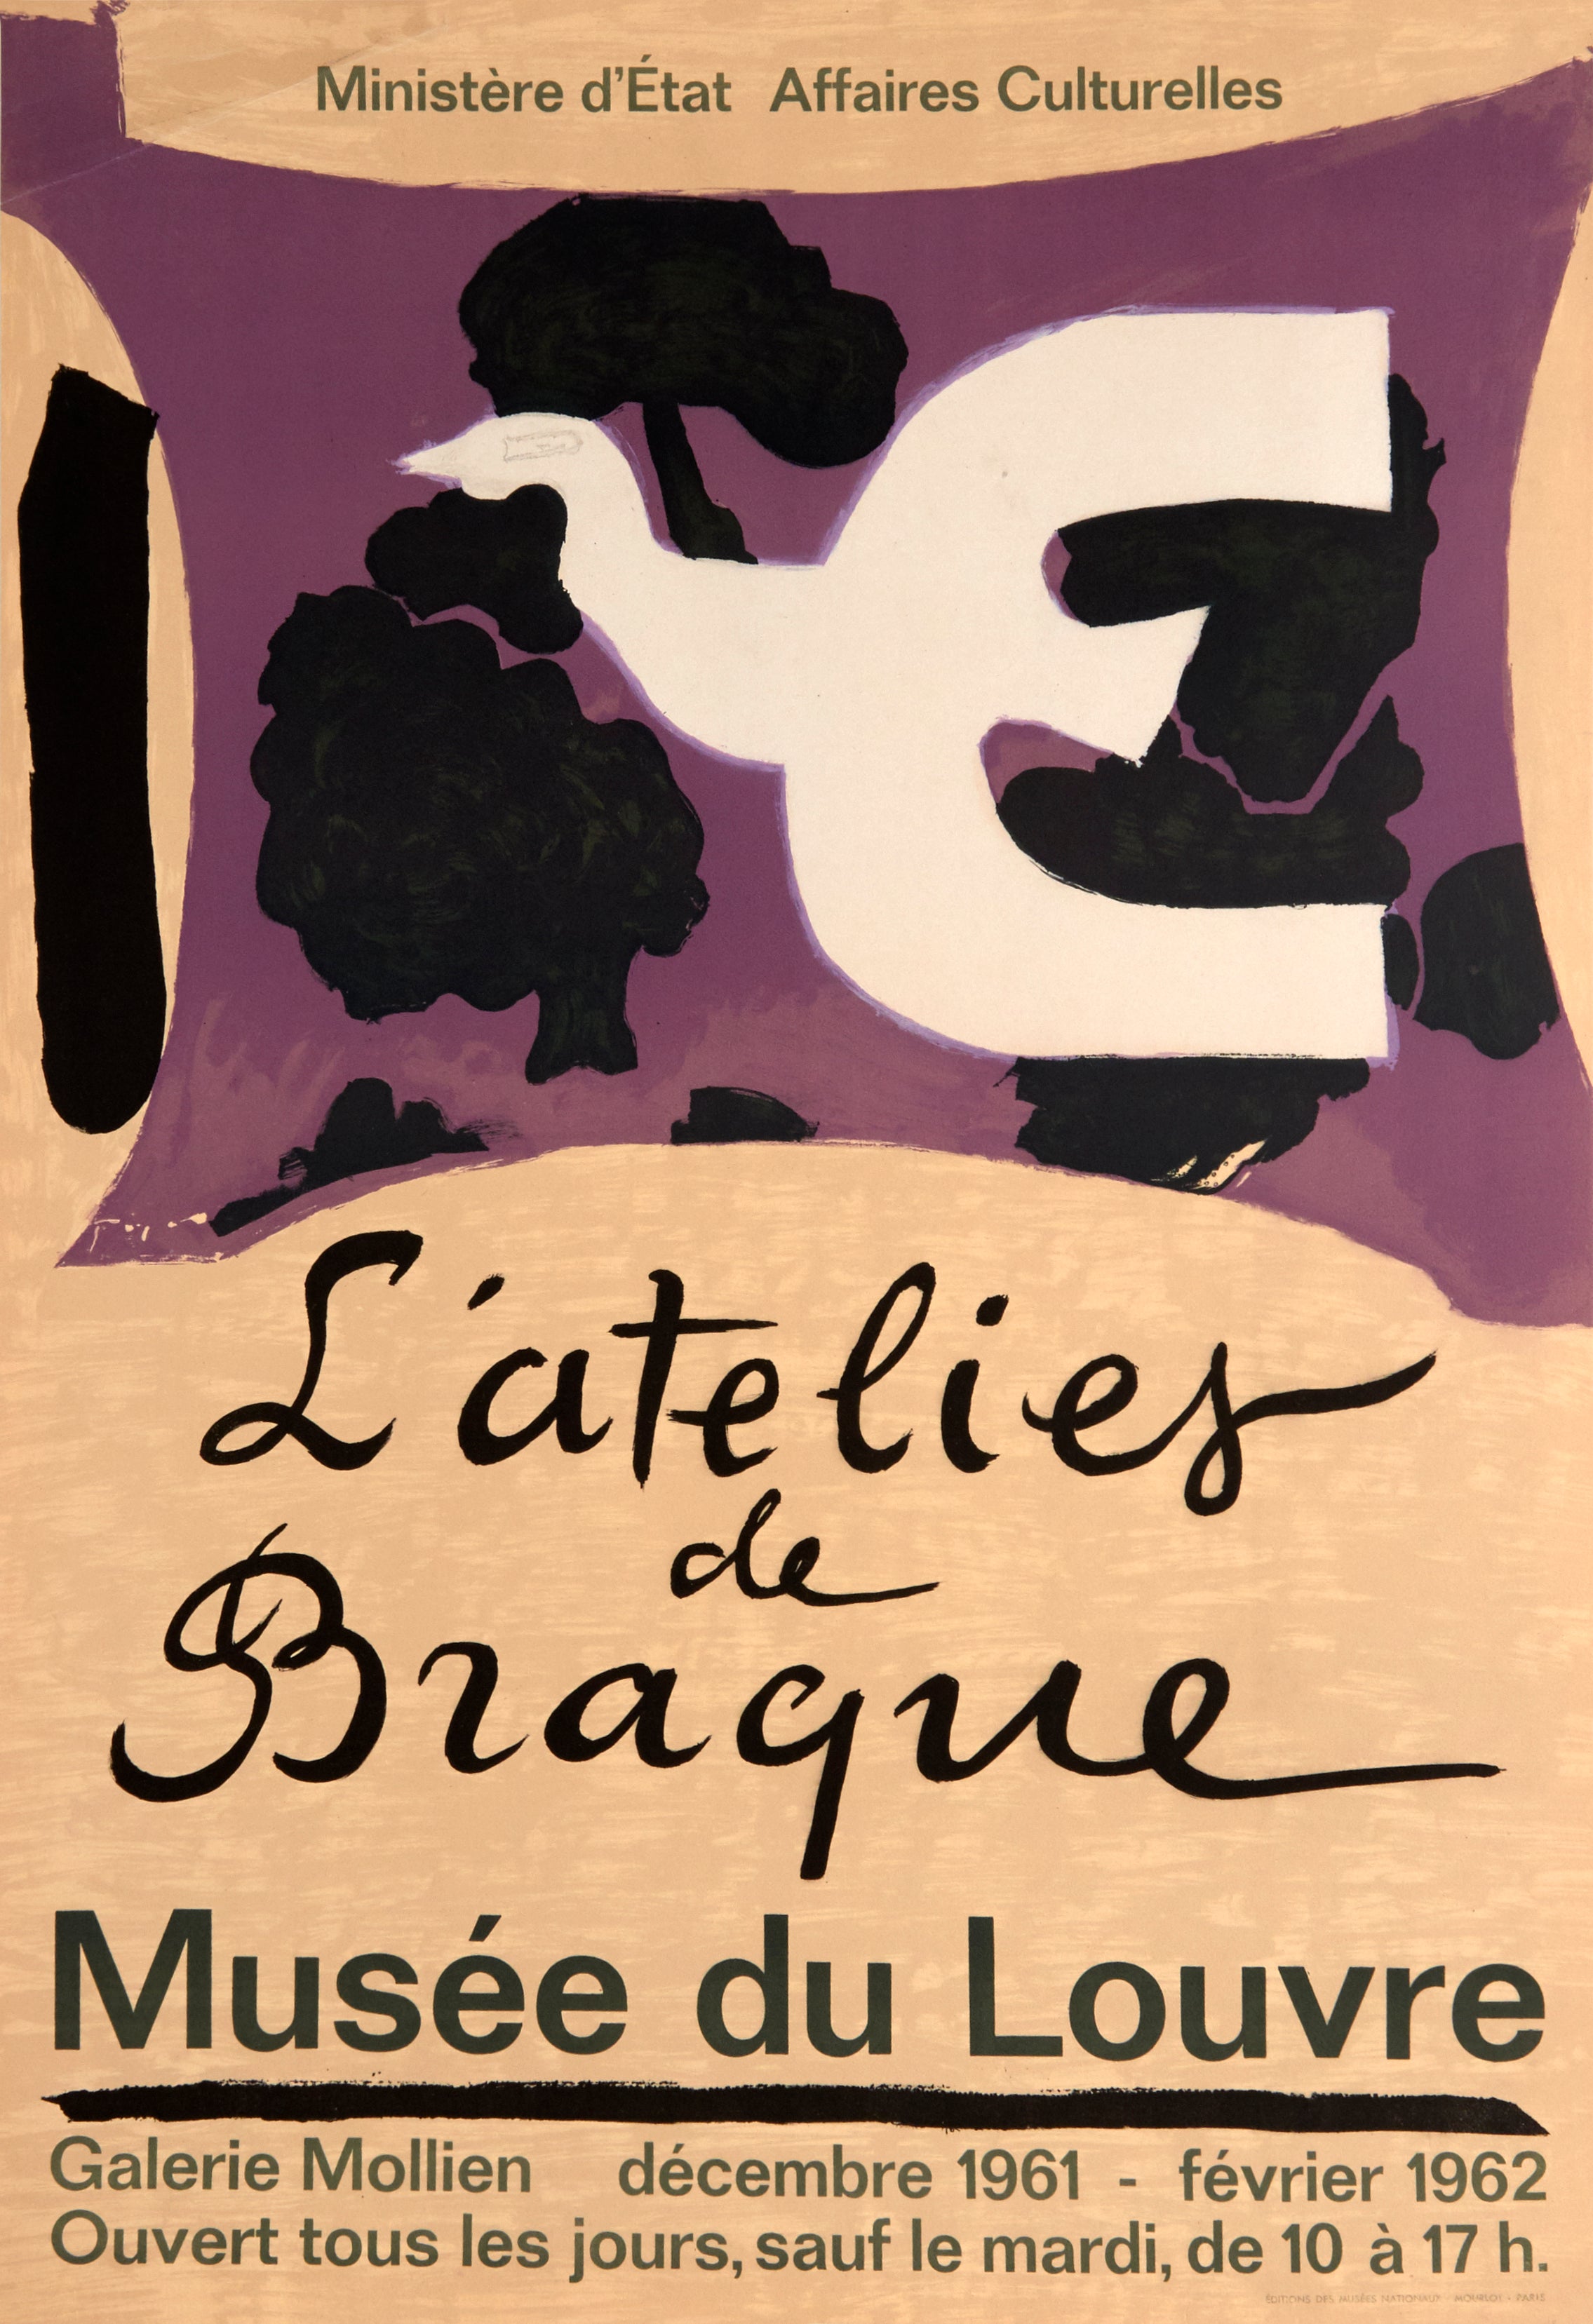 Norm Skuldre på skuldrene overse L'atelier de Braque - Musee du Louvre by Georges Braque, 1961 – Mourlot  Editions